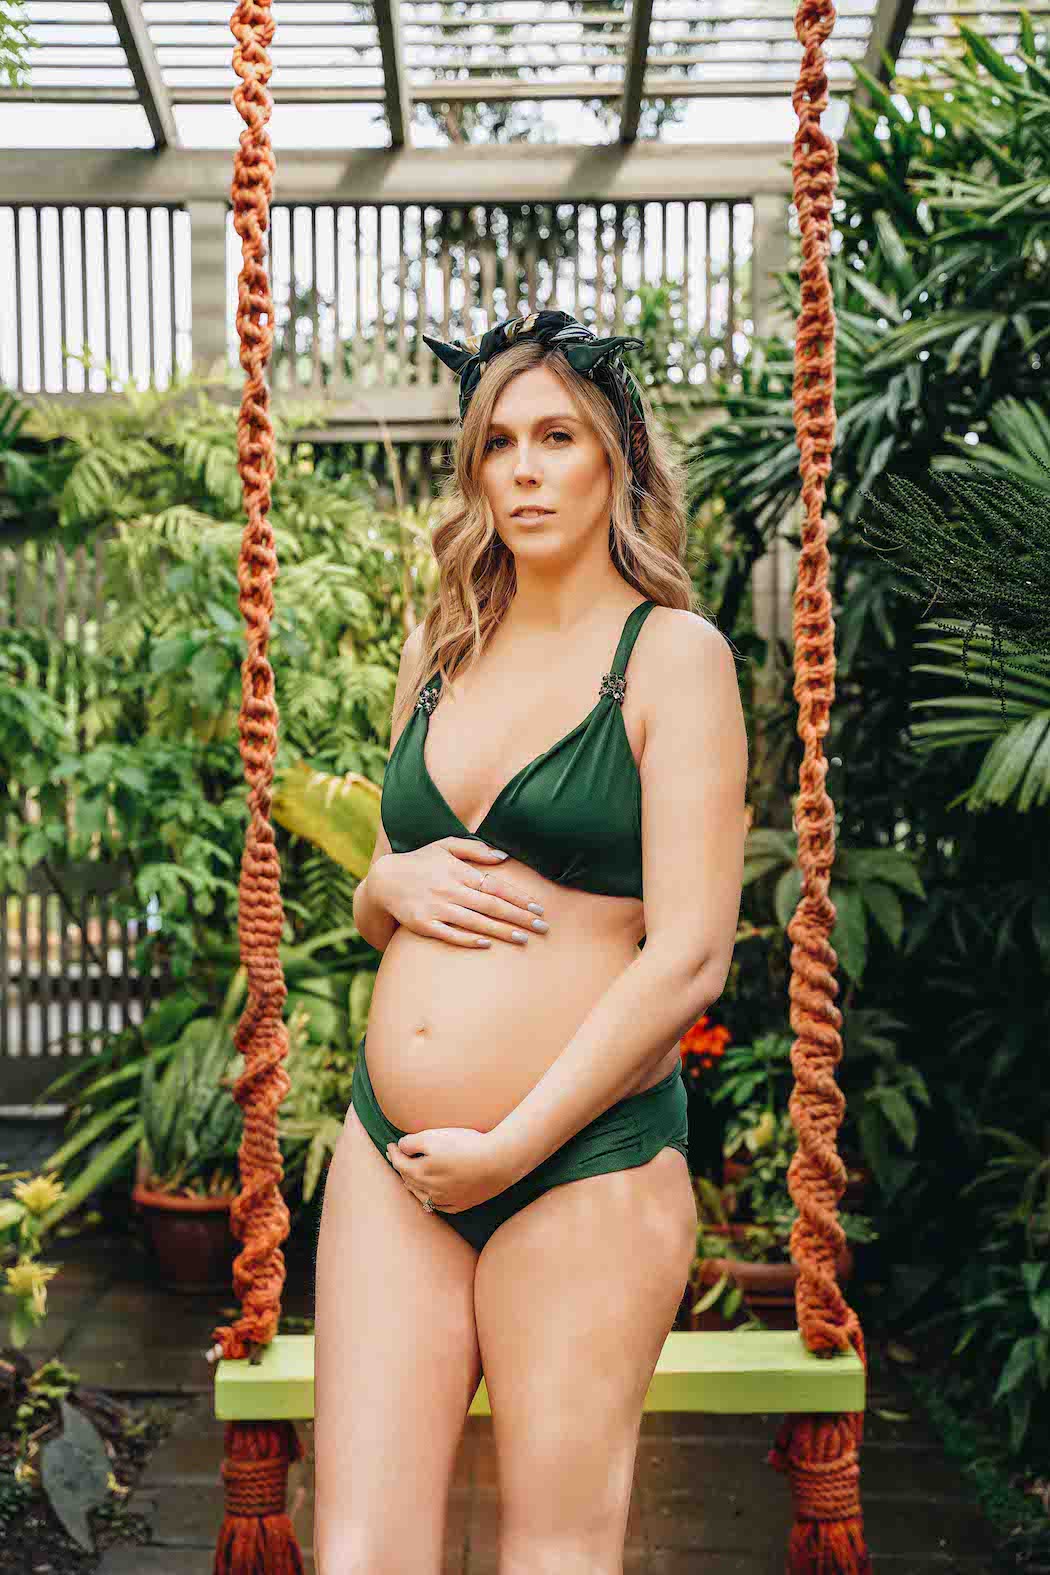 Maternity Swimsuit Pregnant Woman 2 Piece V Neck Halter Tankini Bathing  Suits with Boyshorts Modest Swimwear Beachwear